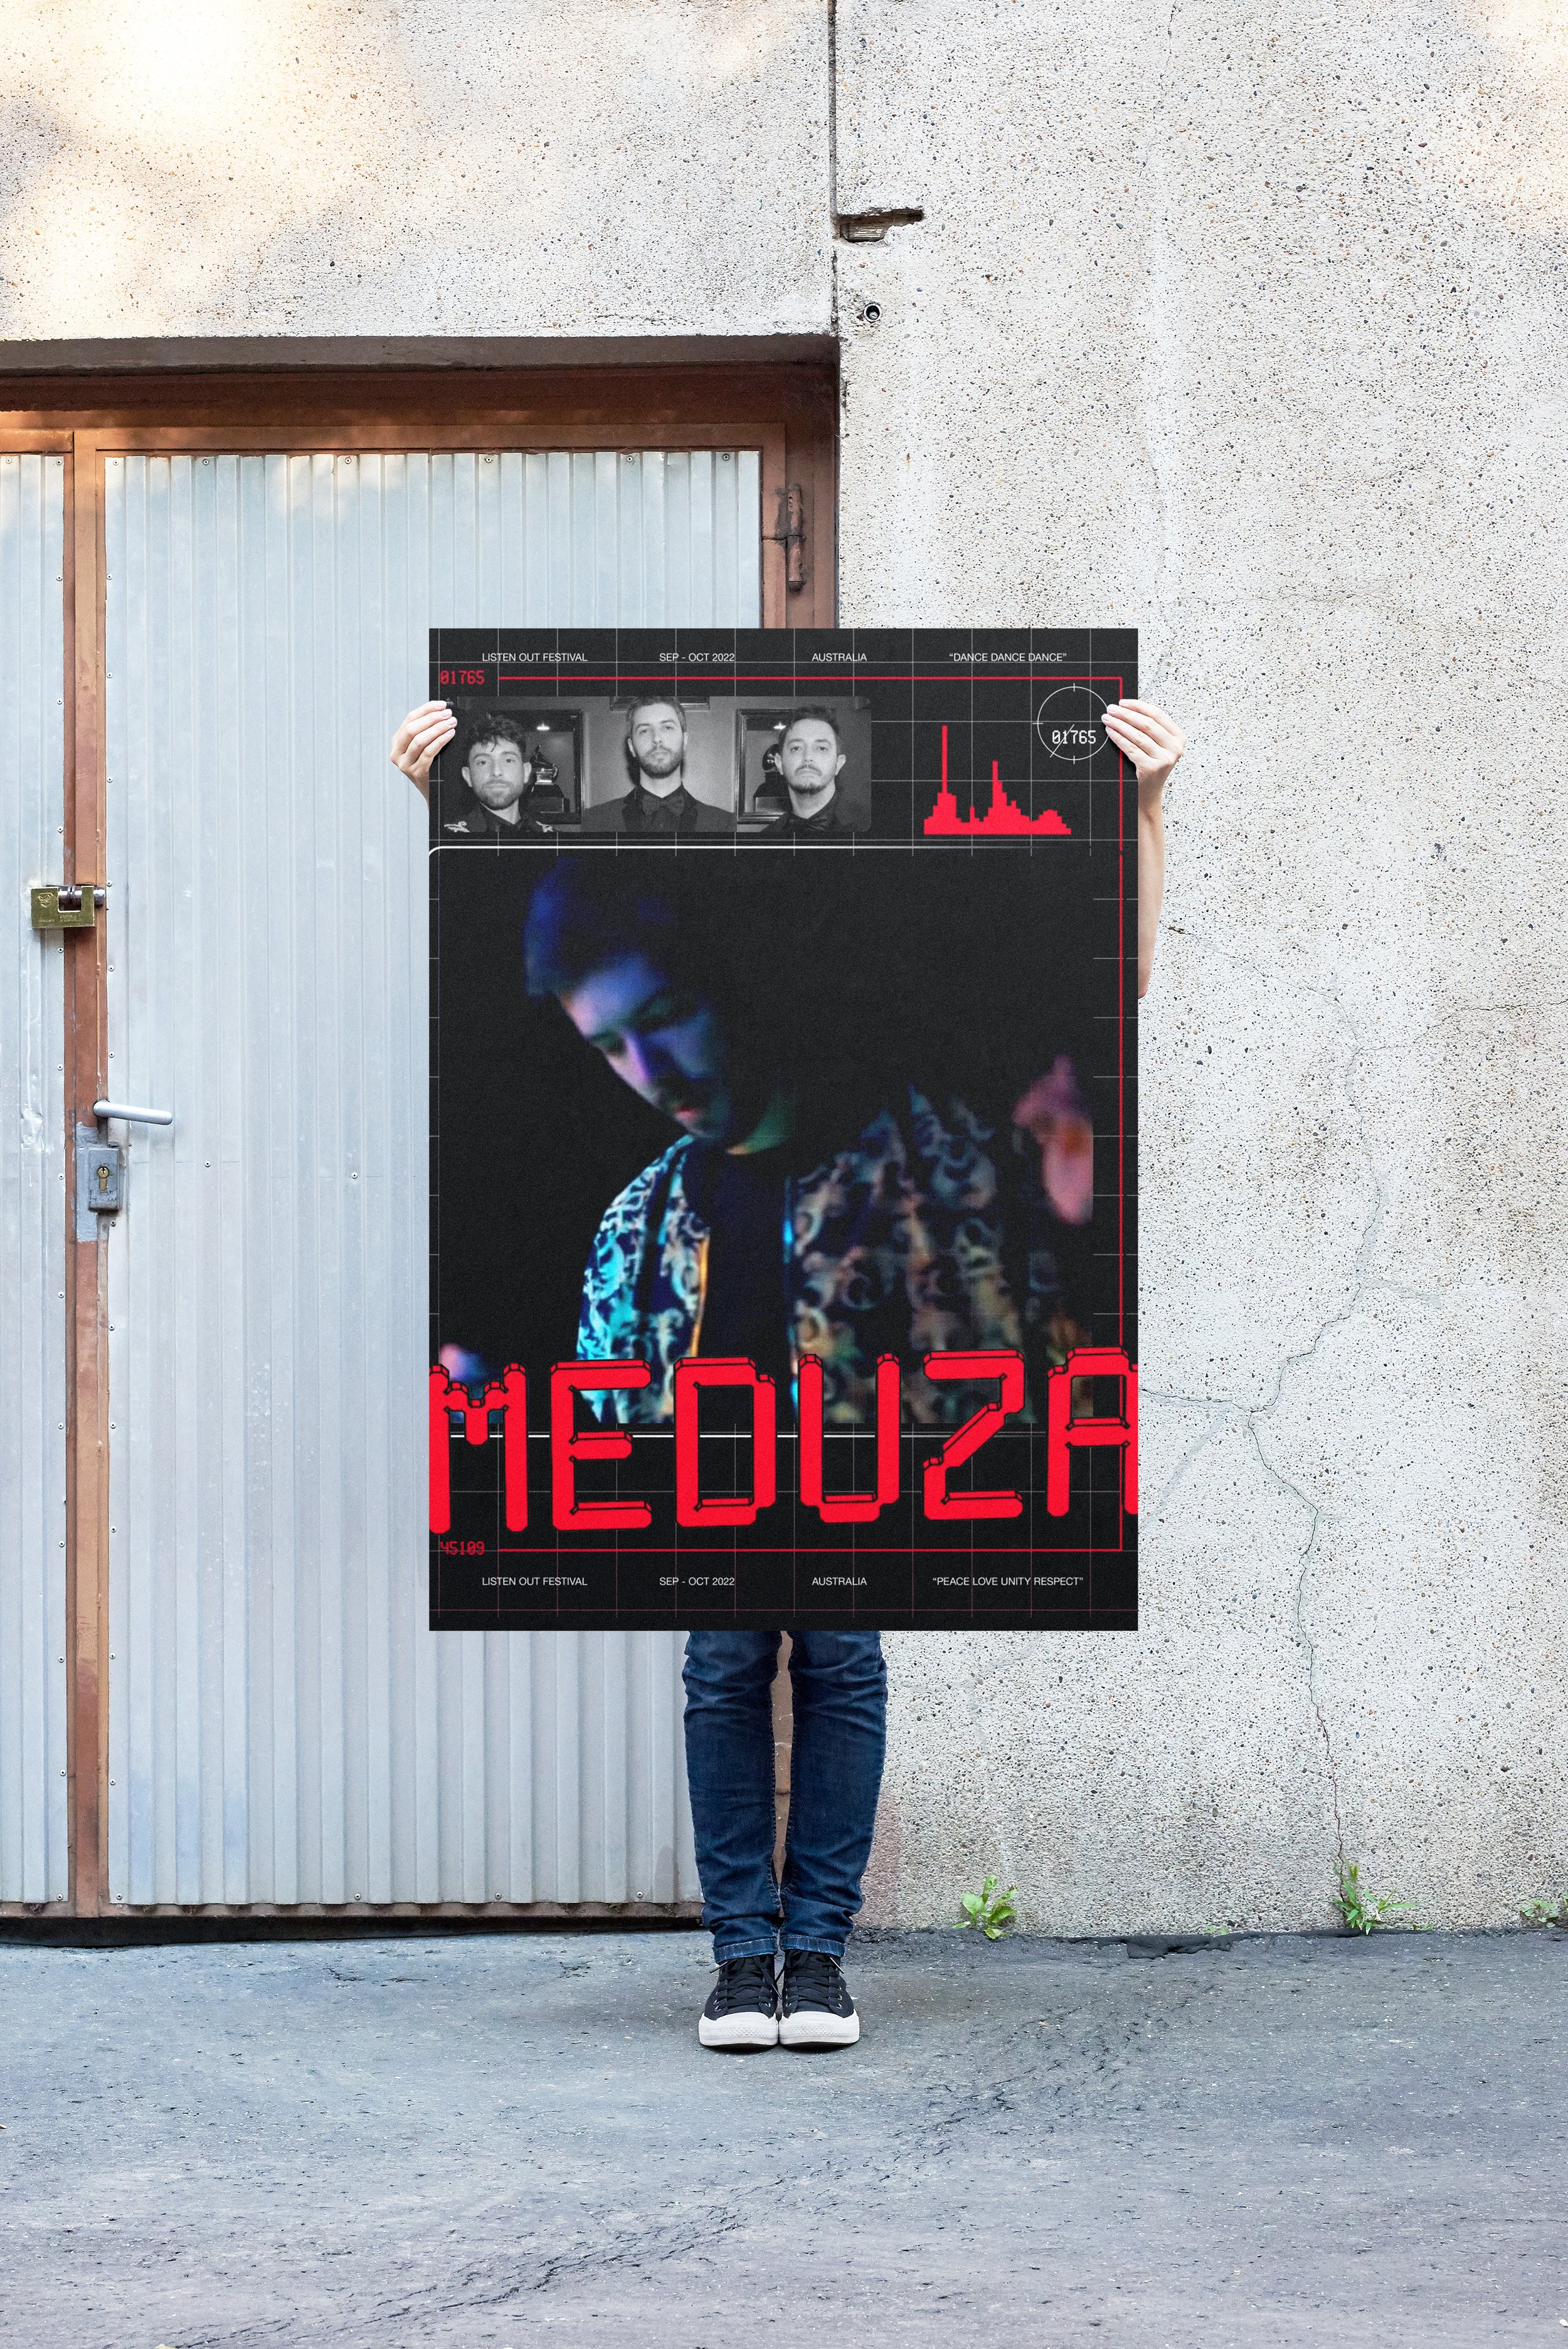 meduza listen out poster.jpg